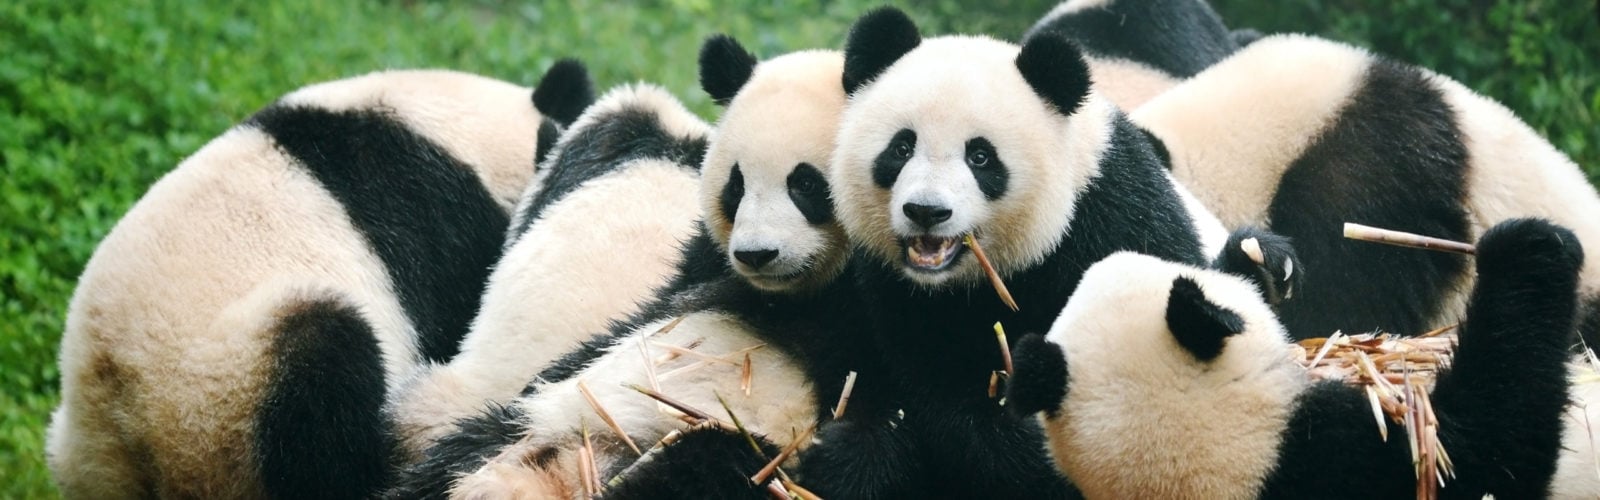 giant-panda-eating-bamboo-chengdu